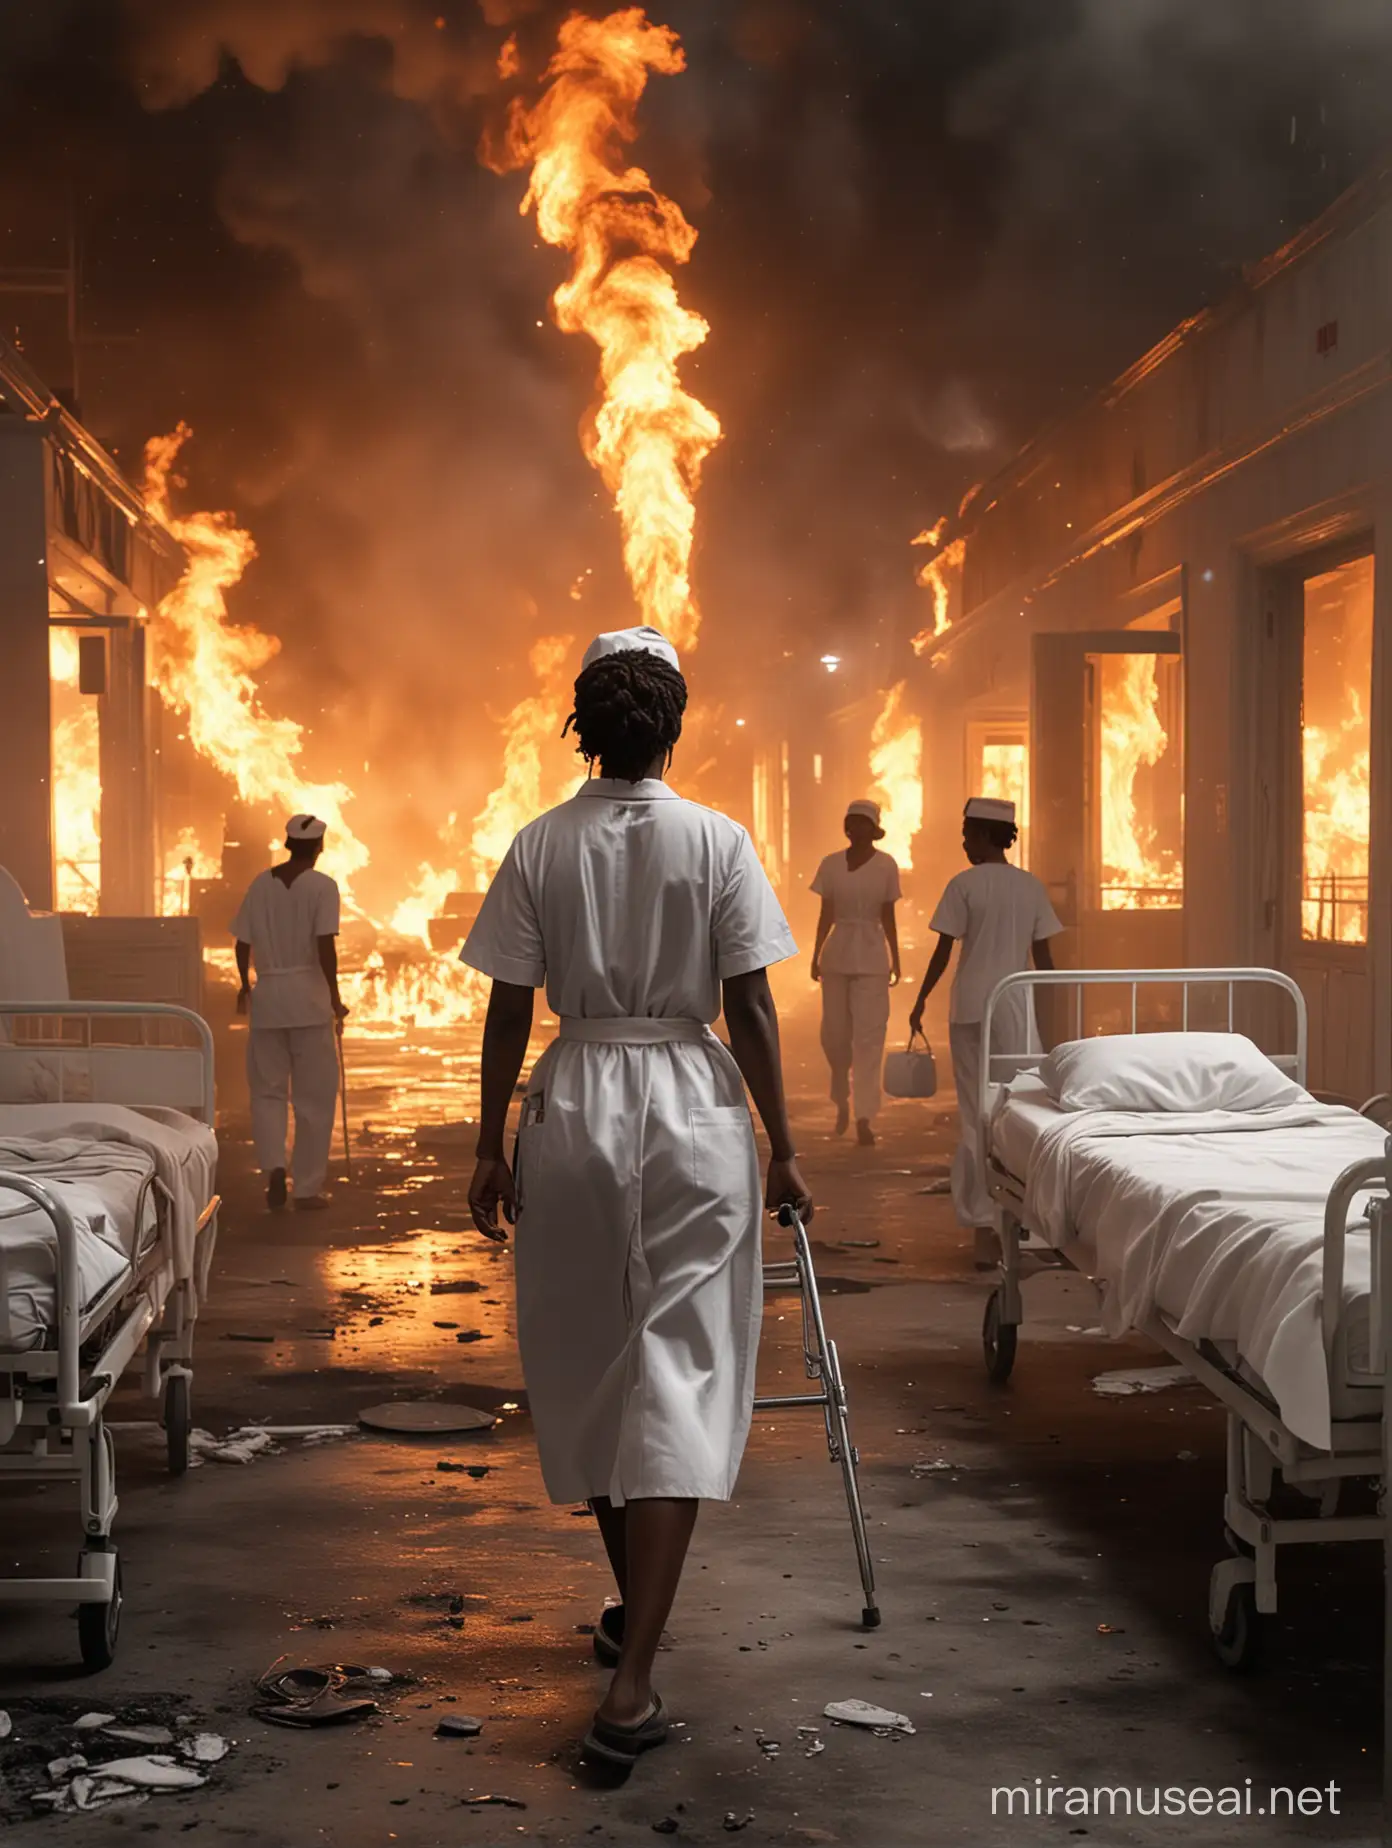 Caribbean Nurse Pulling Patient Amidst Hospital Fire Hyper Realistic Candid Scene